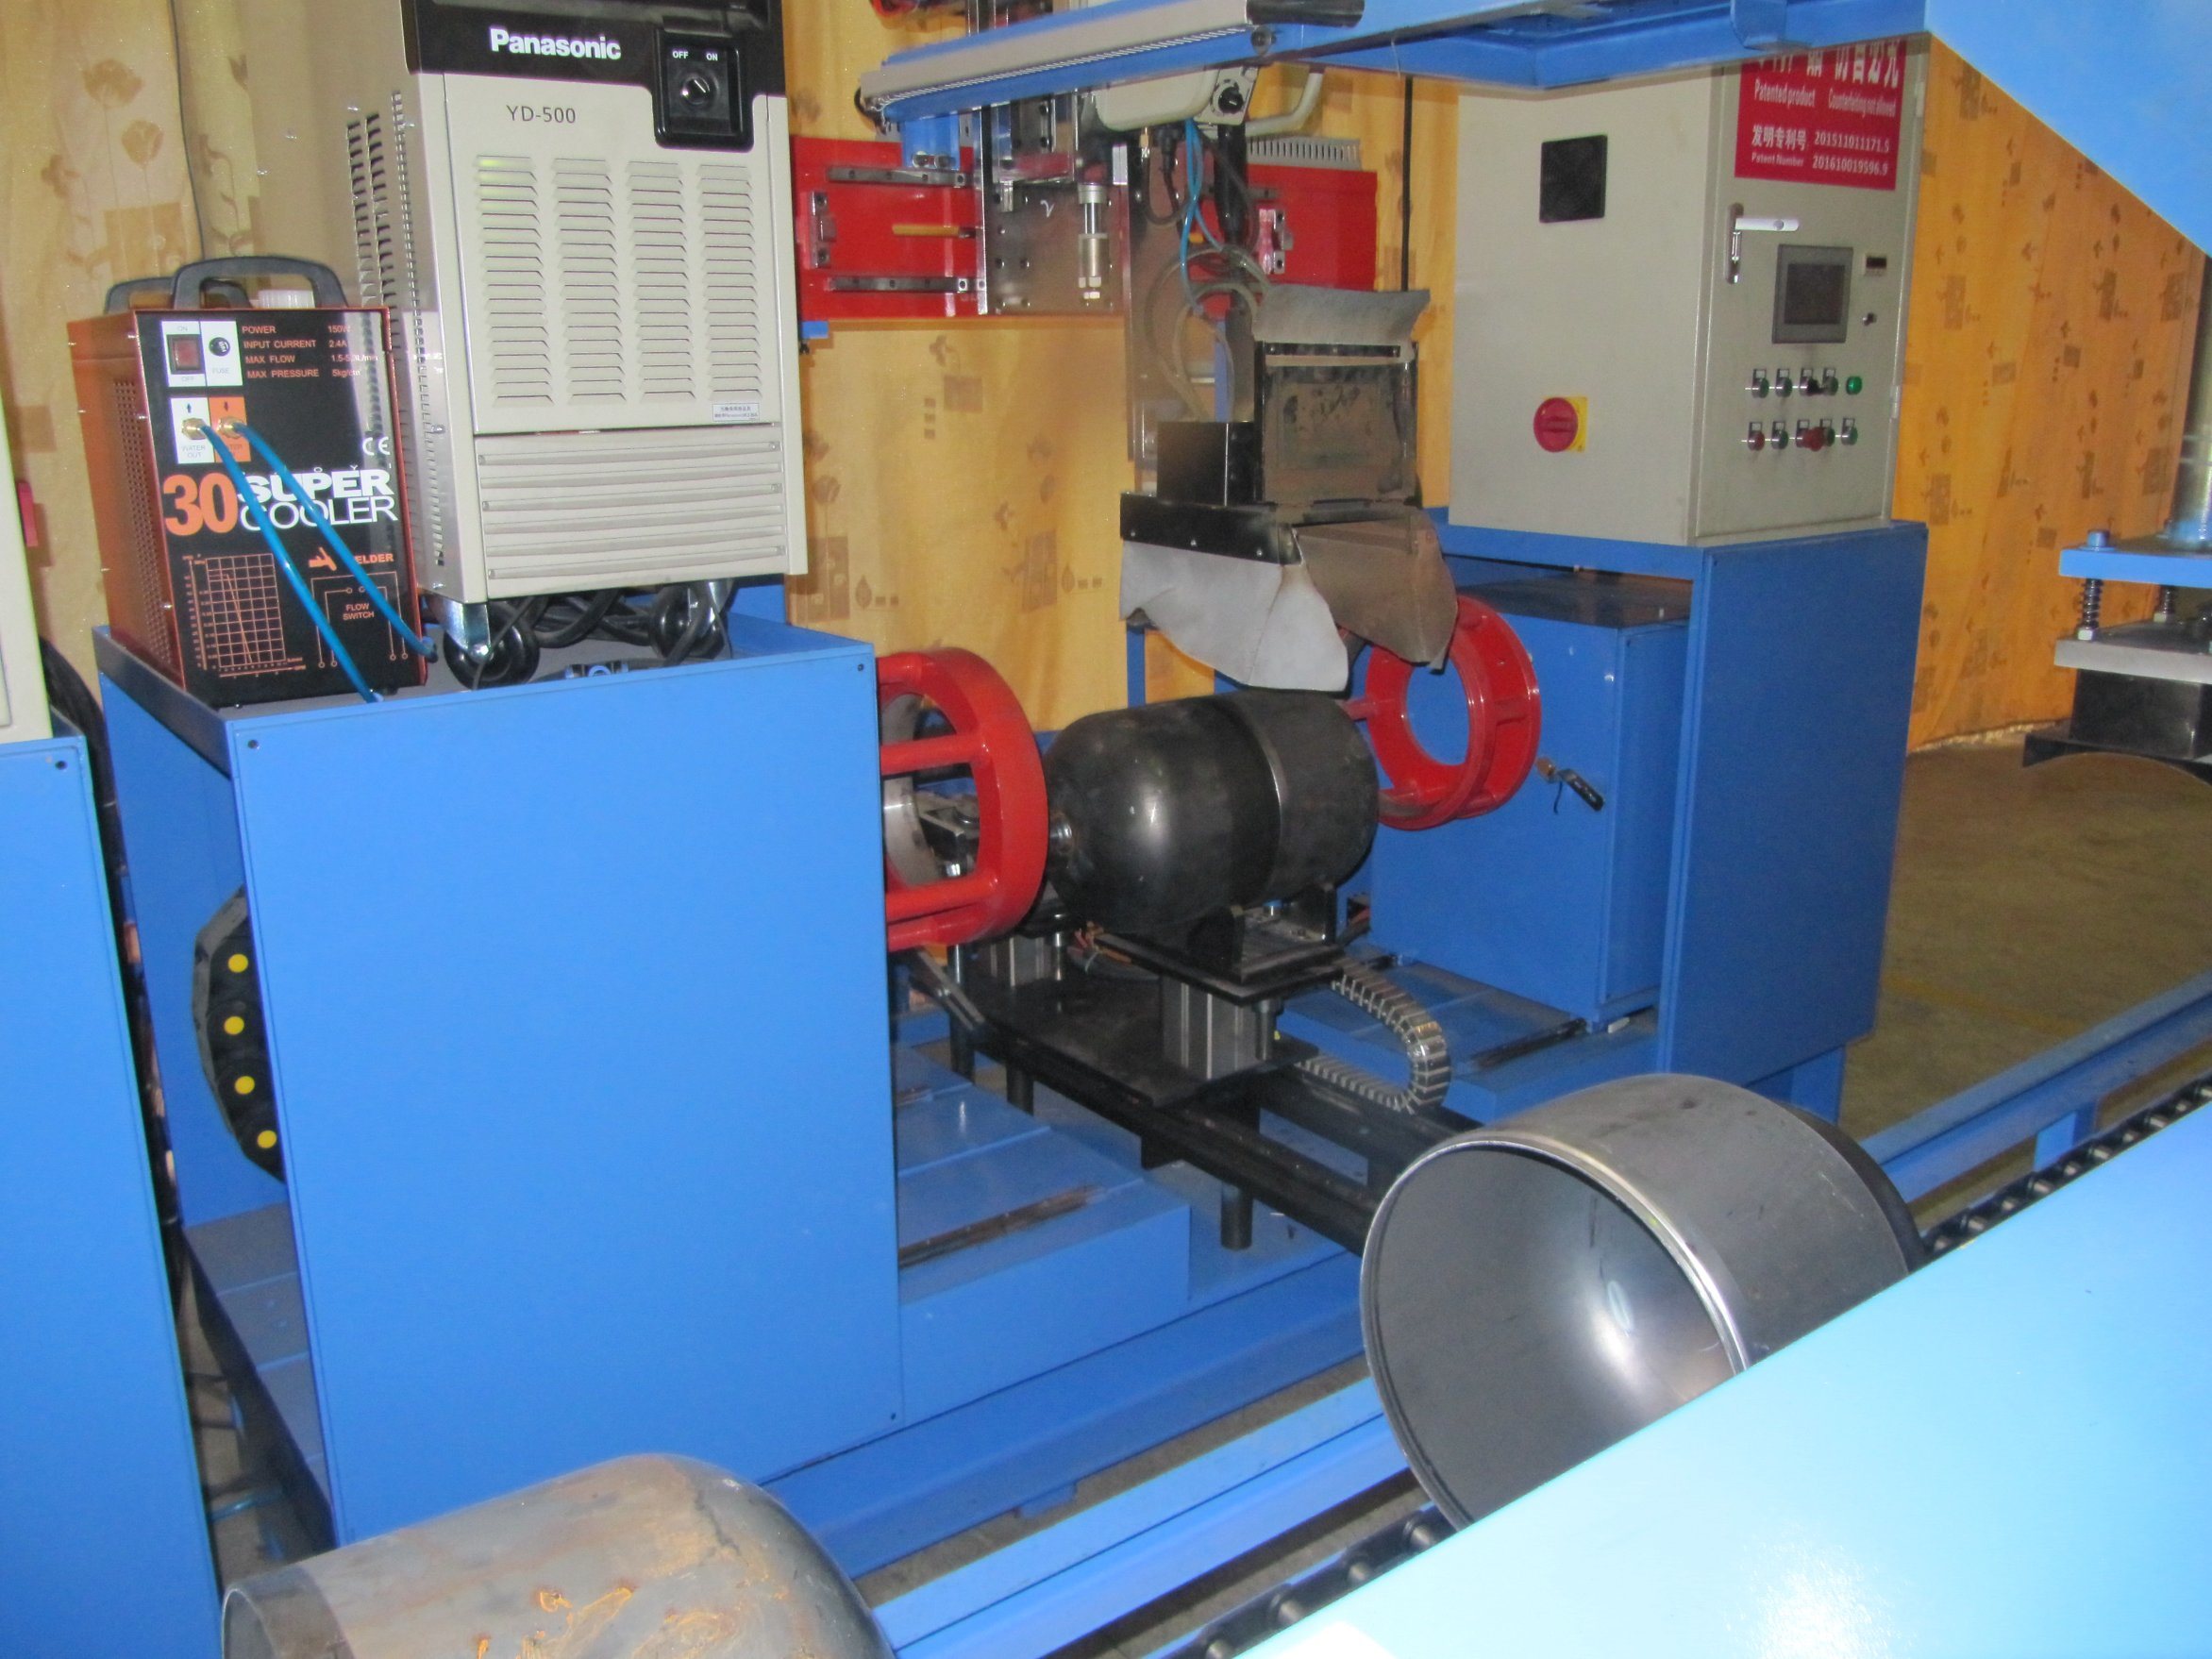 12.5kg/15kg LPG Gas Cylinder Manufacturing Equipments Body Manufacturing Line Circumferential Seam Welding Machine